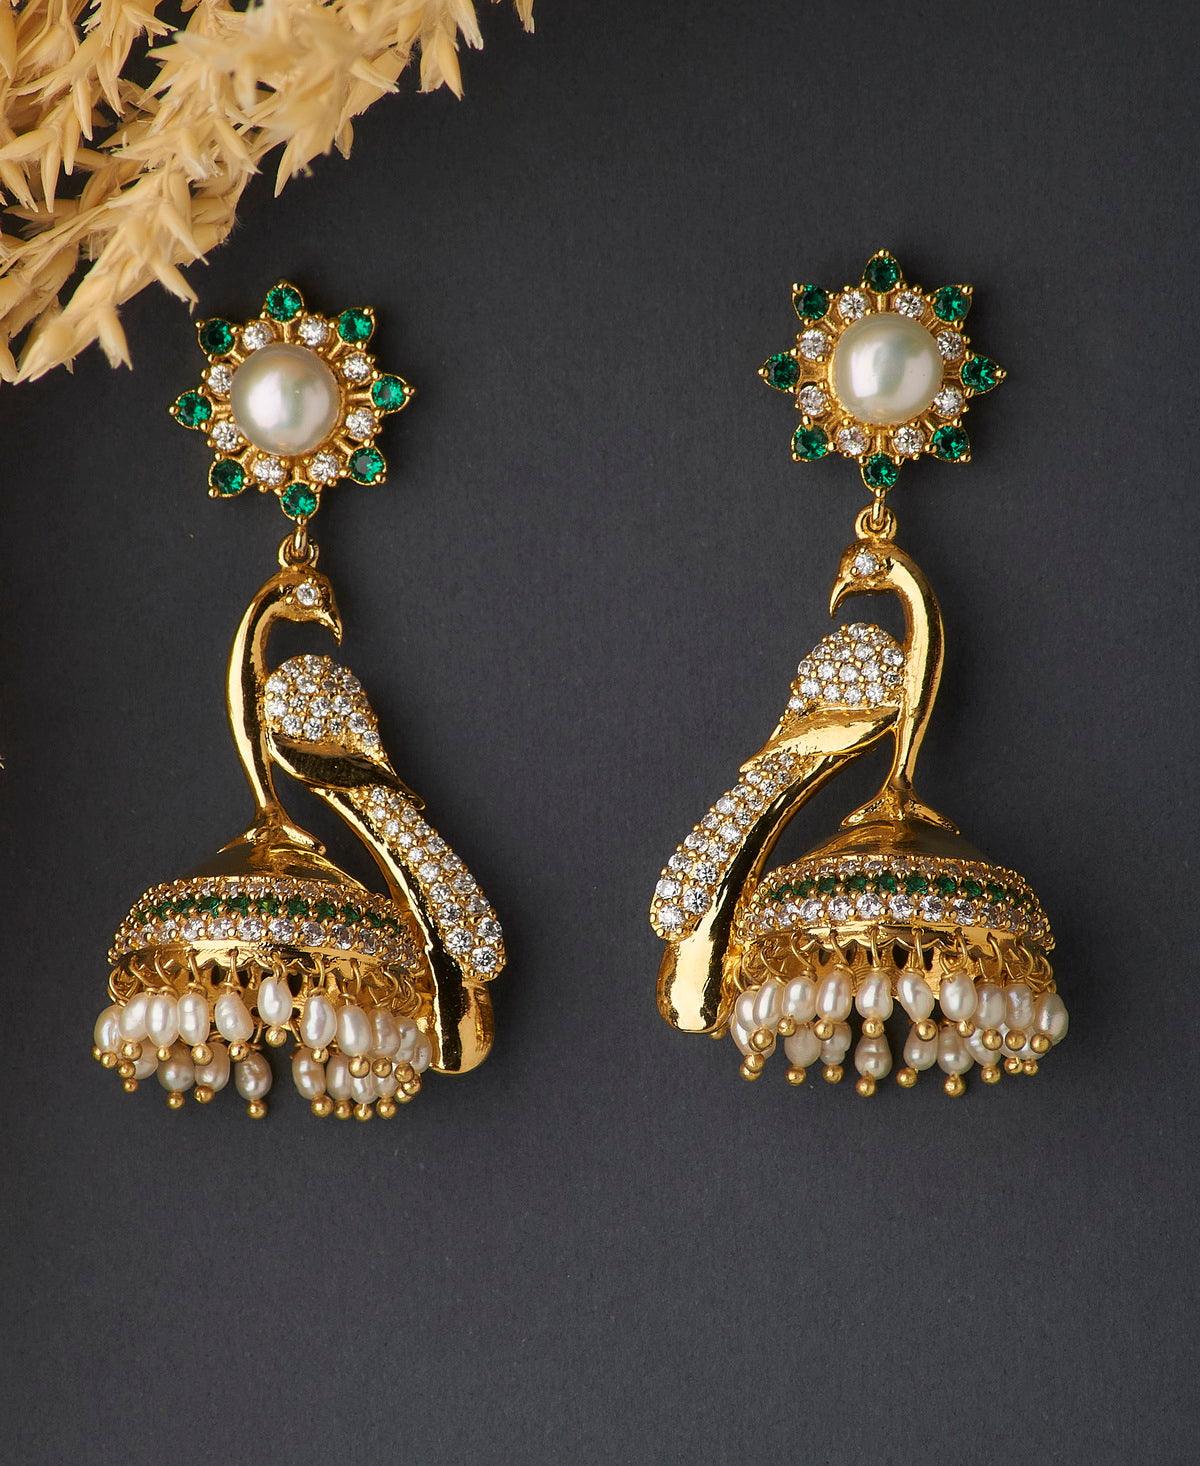 Heirloom Golden Peacock Pearl Earrings - Chandrani Pearls